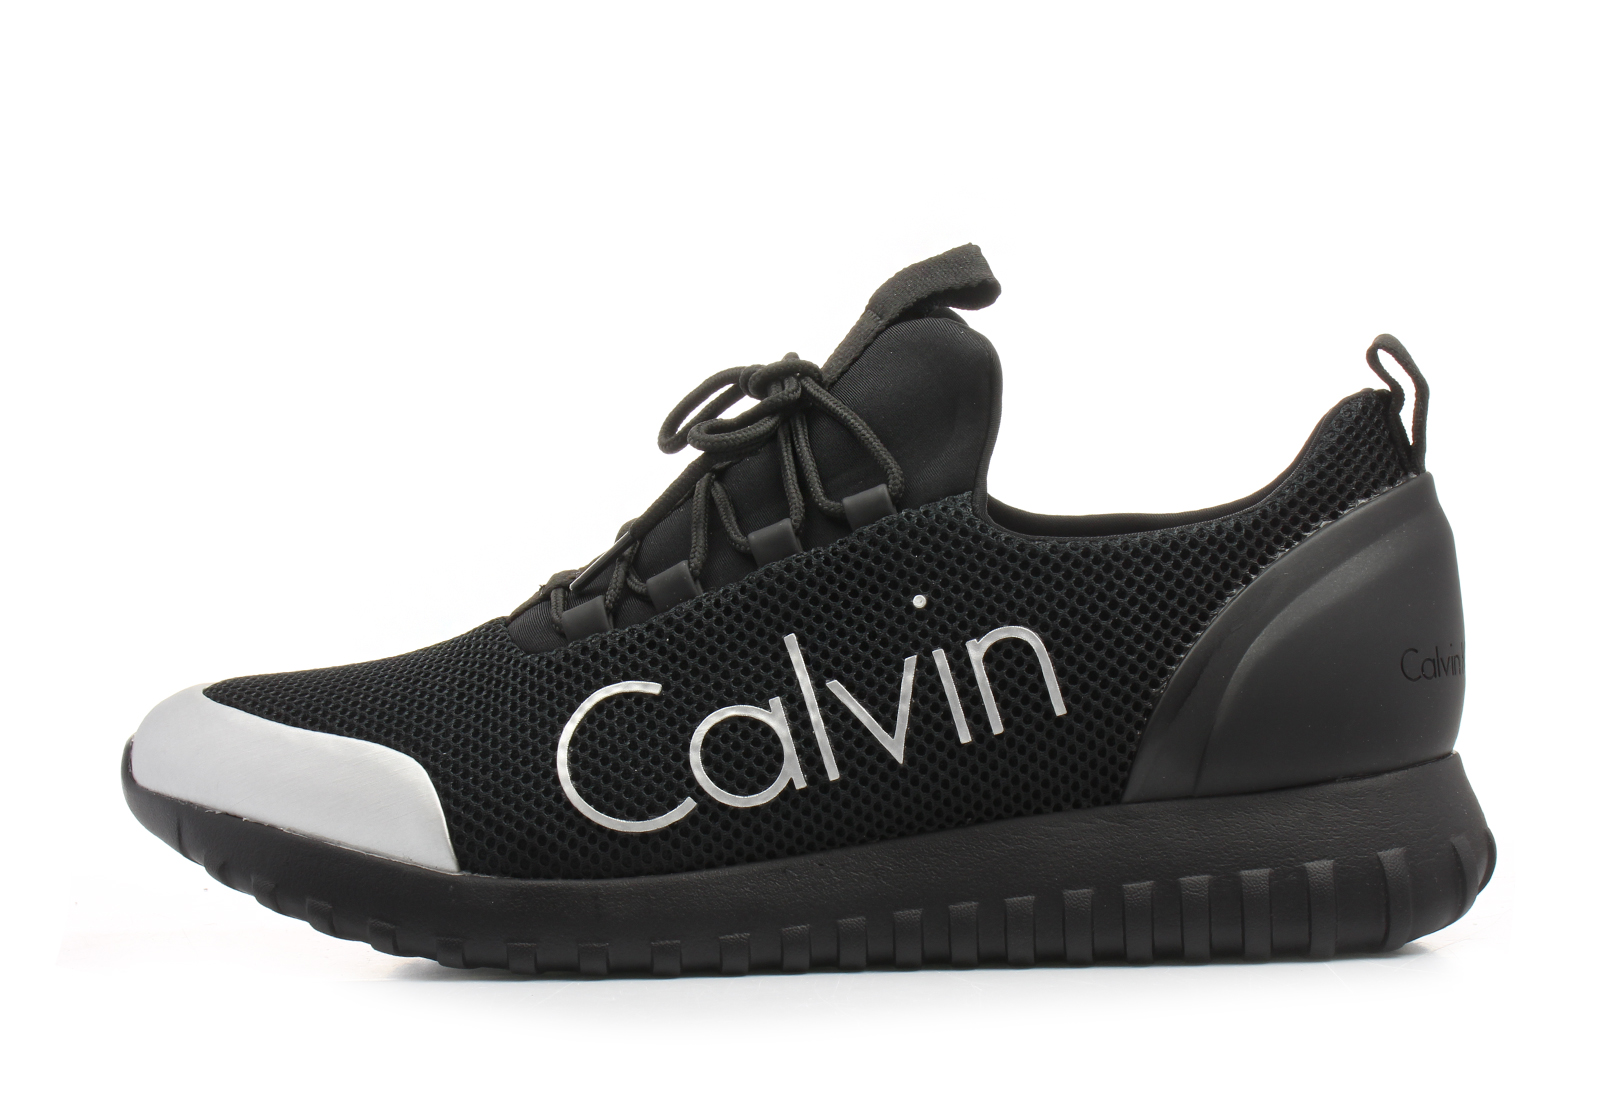 Calvin Klein Jeans Shoes - Ron - S0506-BKS - Online shop for sneakers